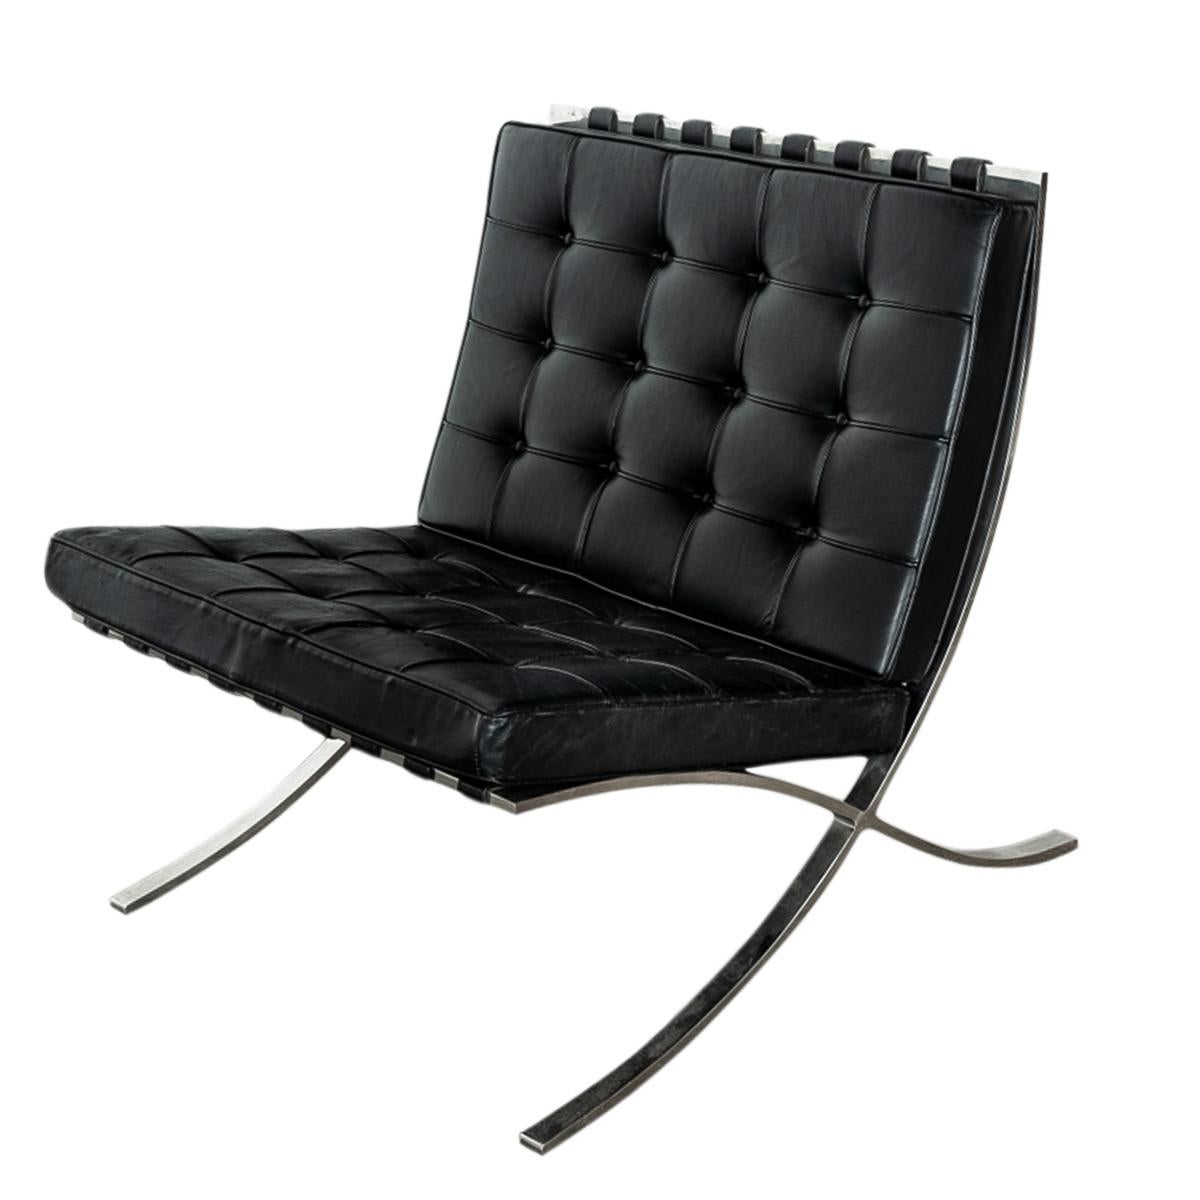 Frühes Paar MCM Knoll Barcelona-Stühle, Mies van der Rohe 1961, schwarzes Leder im Angebot 1